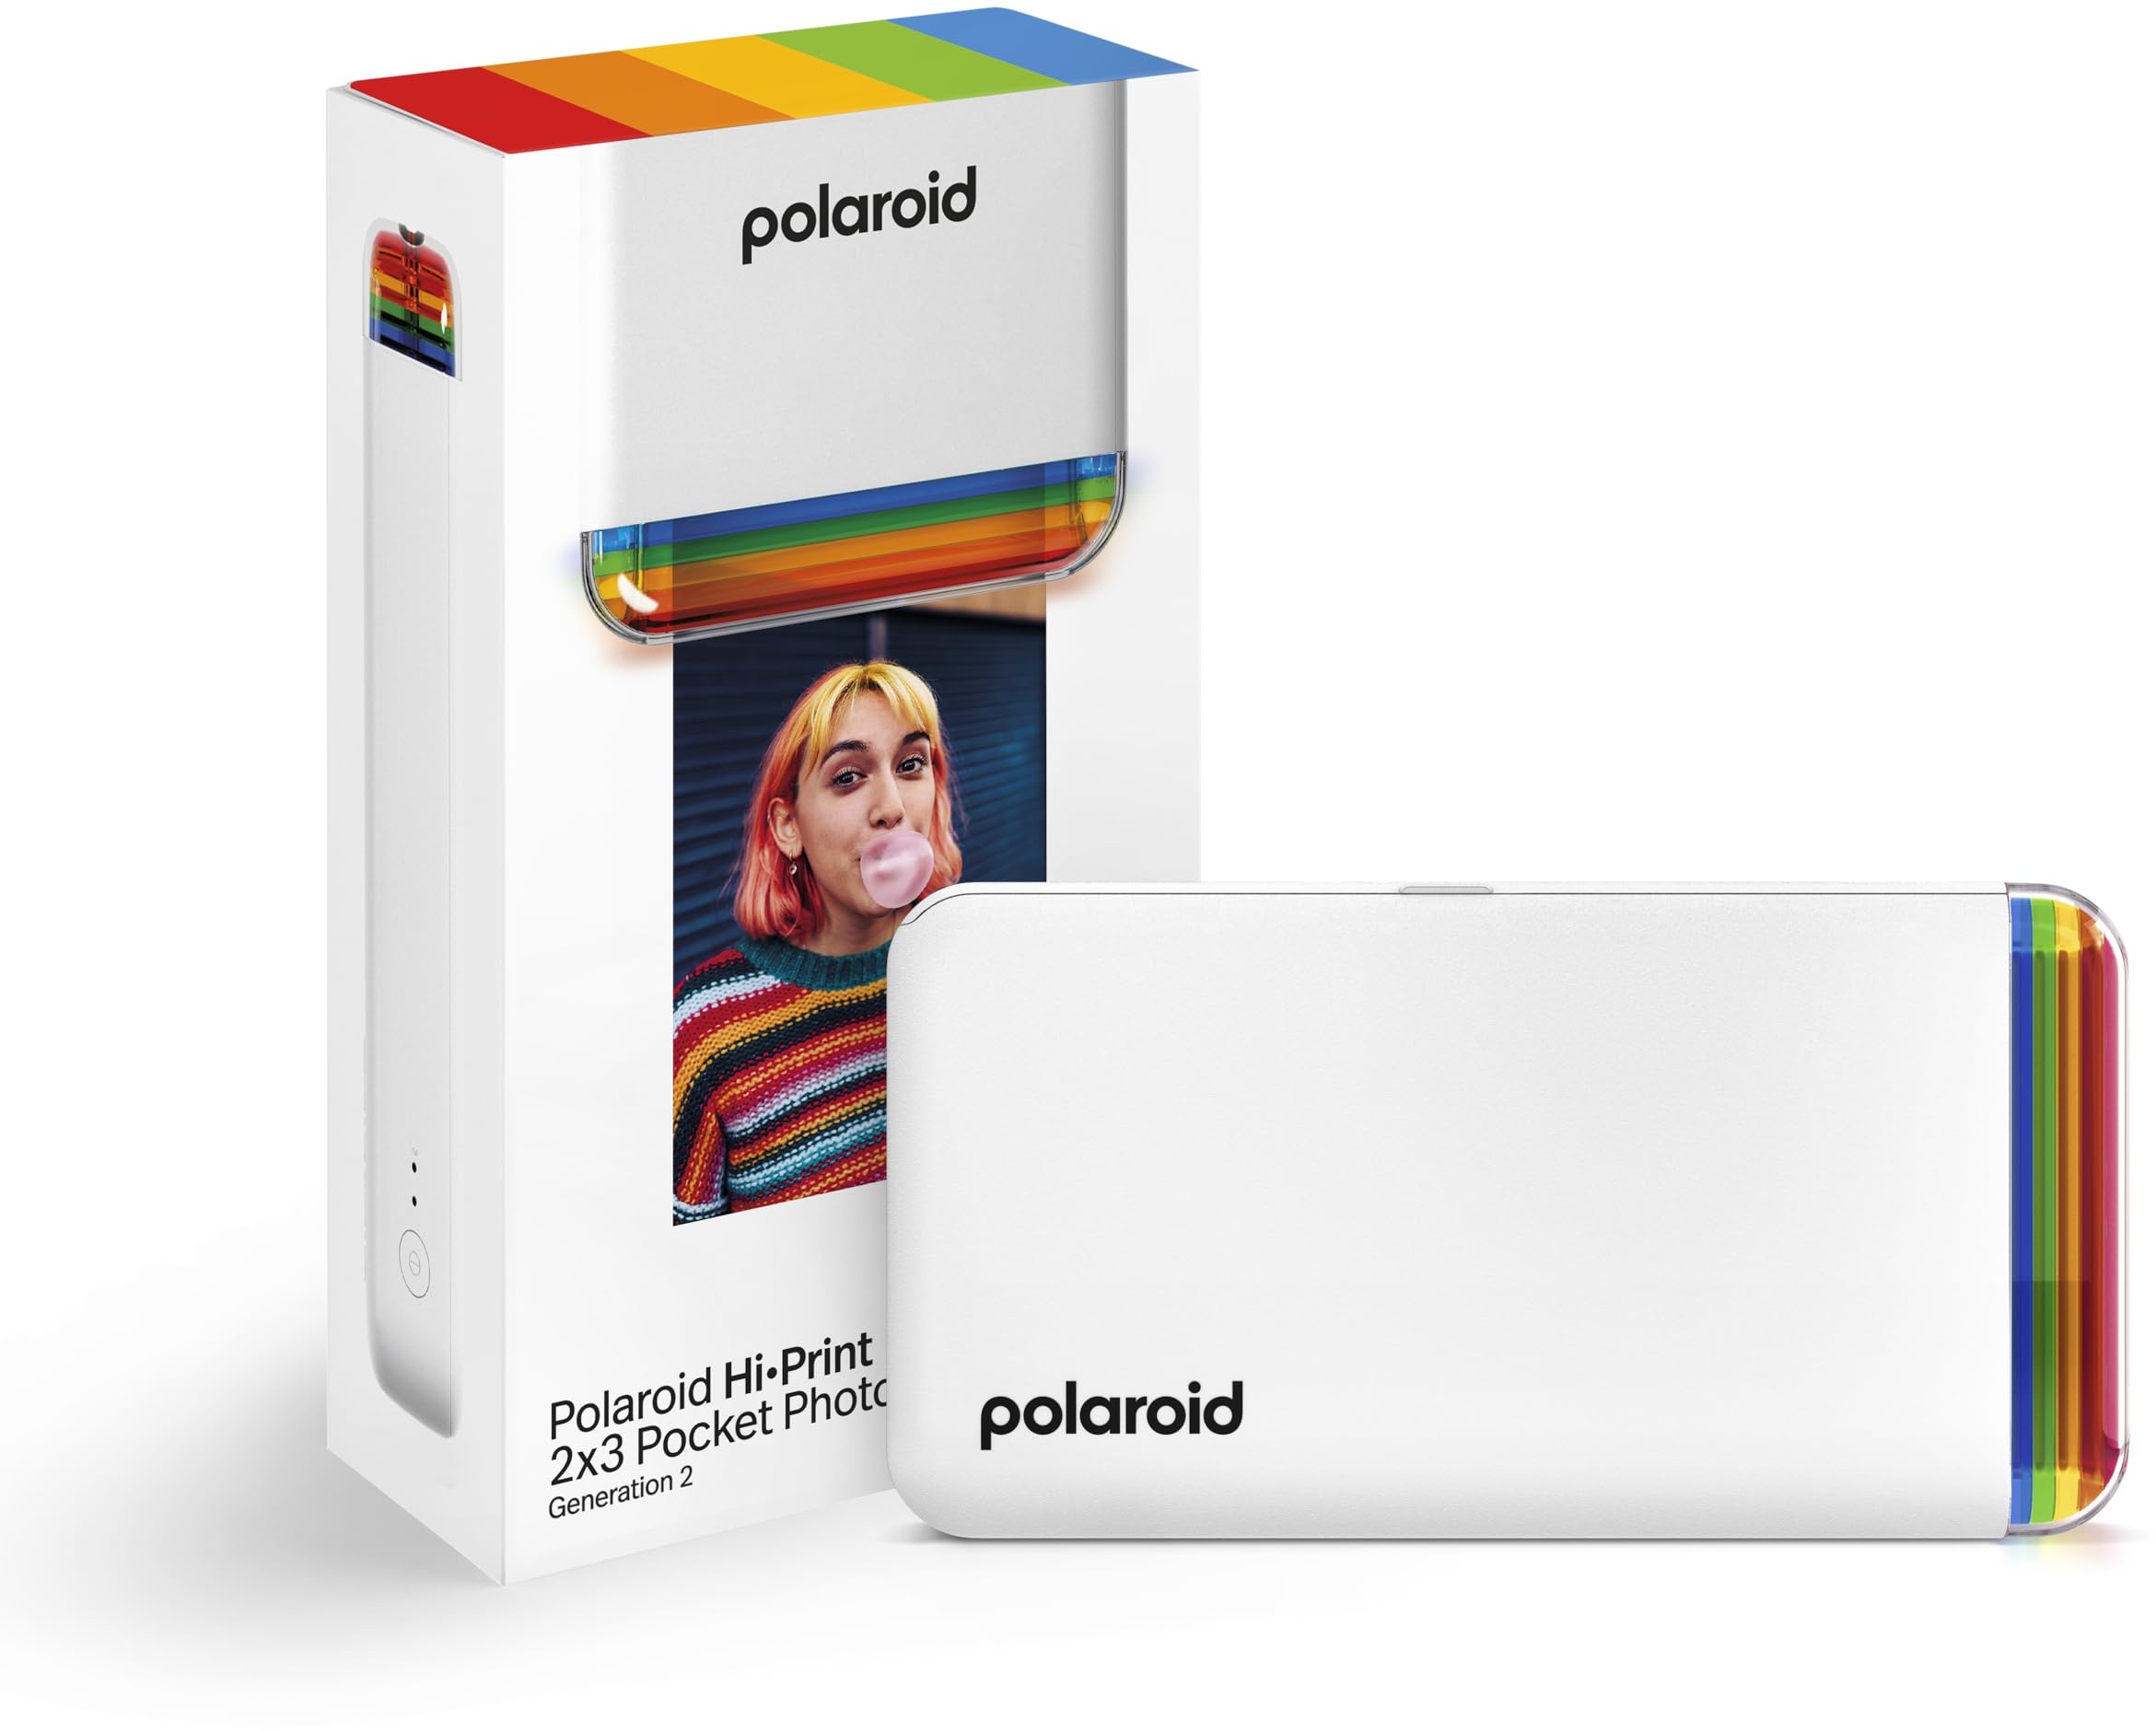 Polaroid Hi-Print - 2nd Generation - Bluetooth Connected 2x3 Pocket Photo, Dye-Sub Printer - White